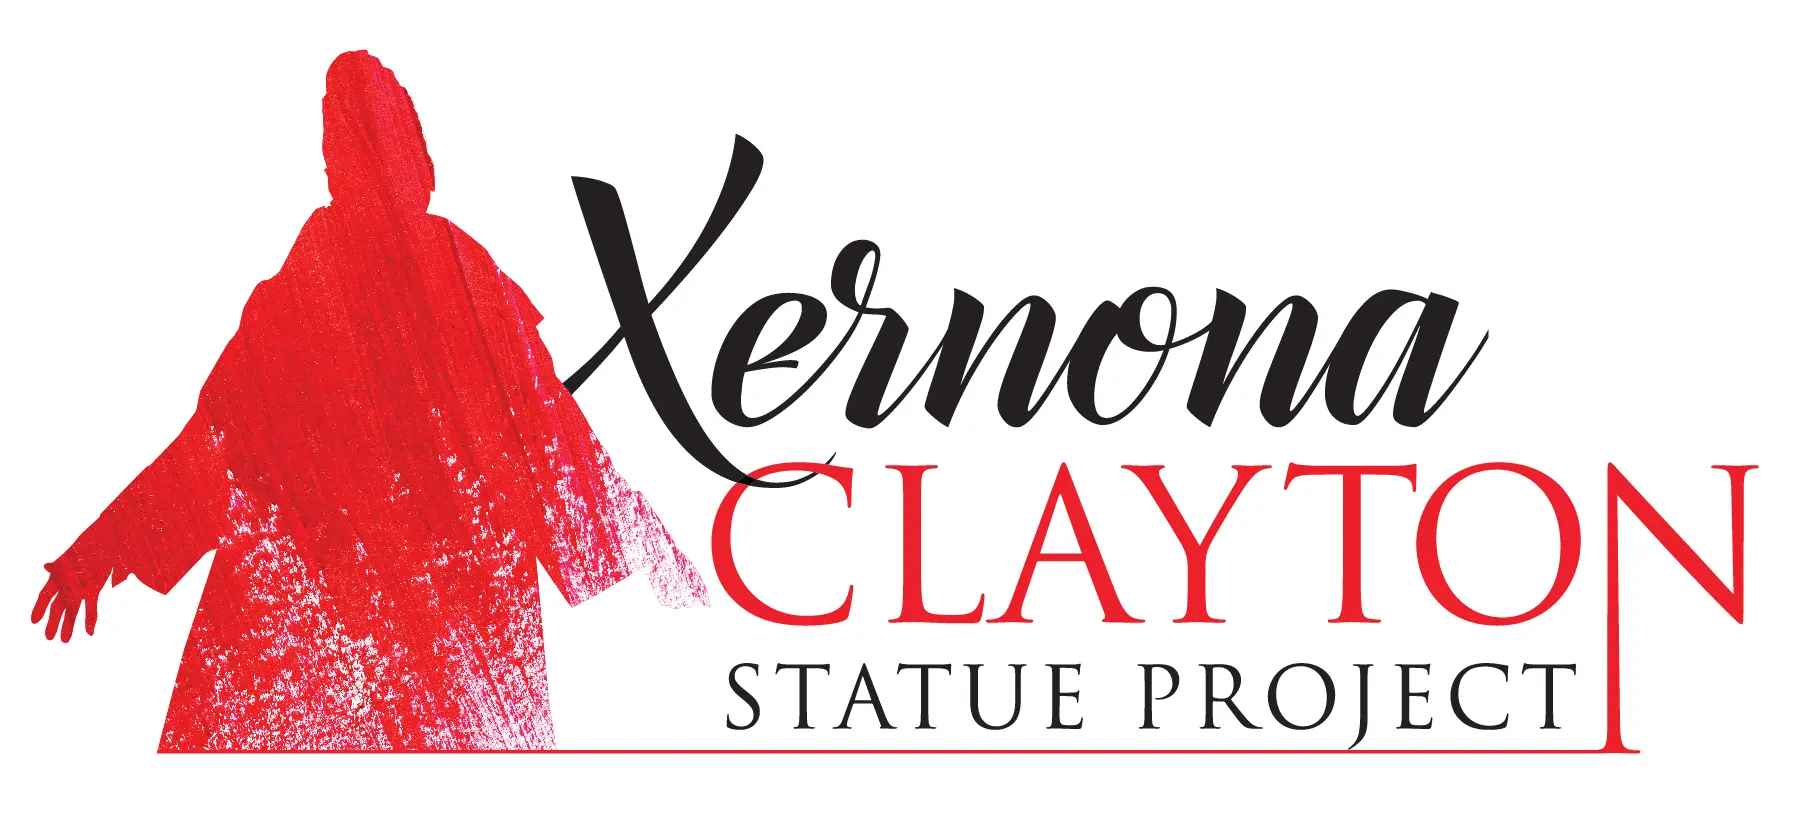 Xernona Clayton Statue Project Logo